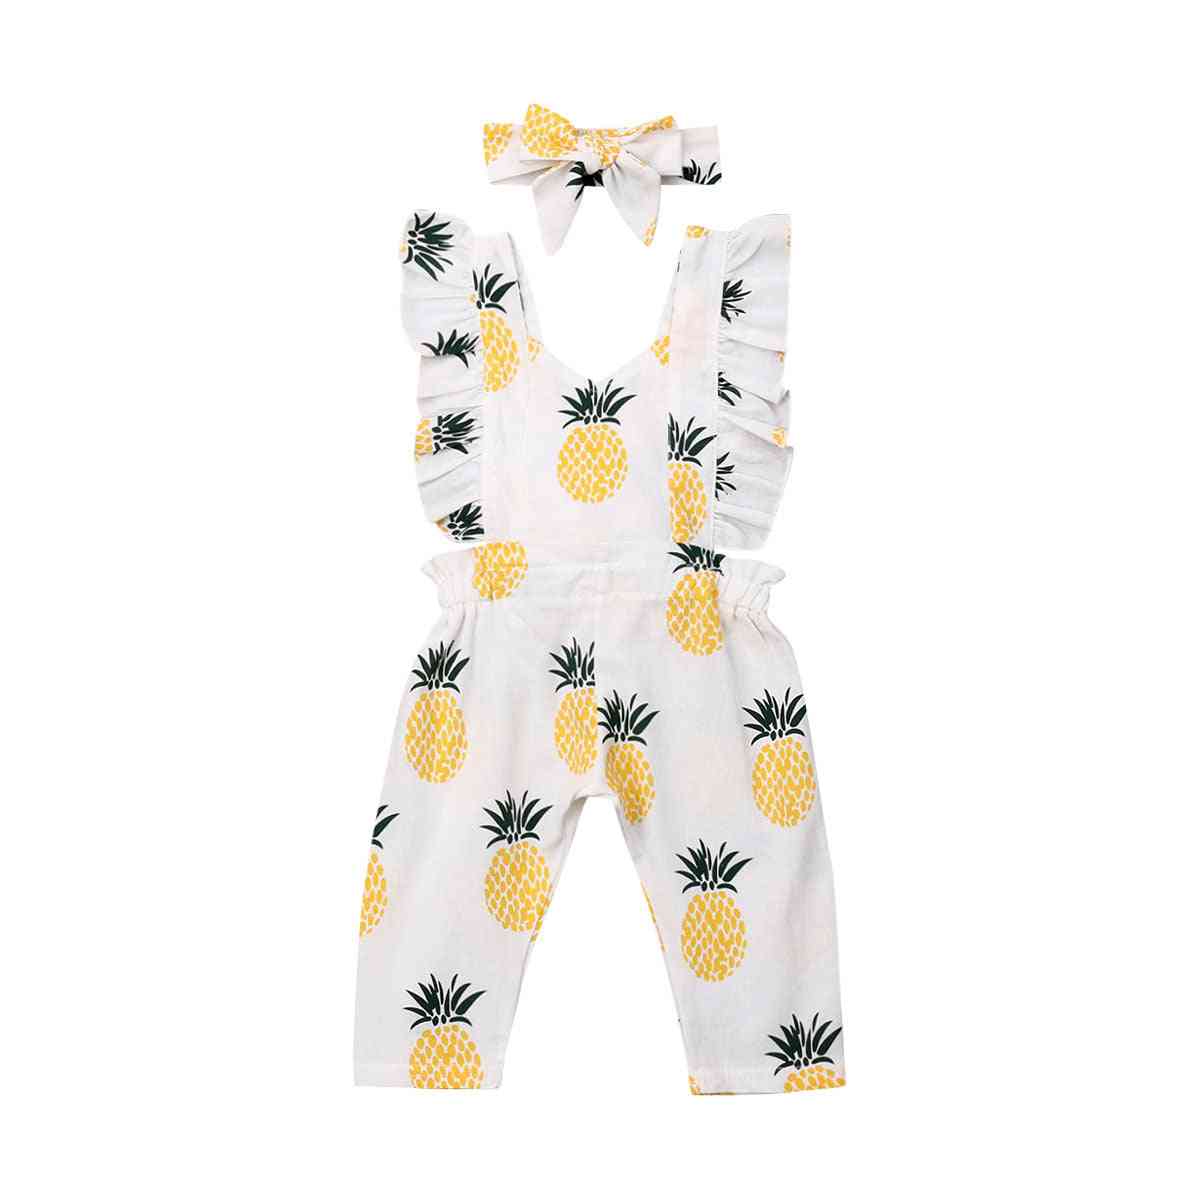 Pasgeboren baby meisje kleding sleevless ruche ananas print romper jumpsuit hoofdband outfits zomerkleding